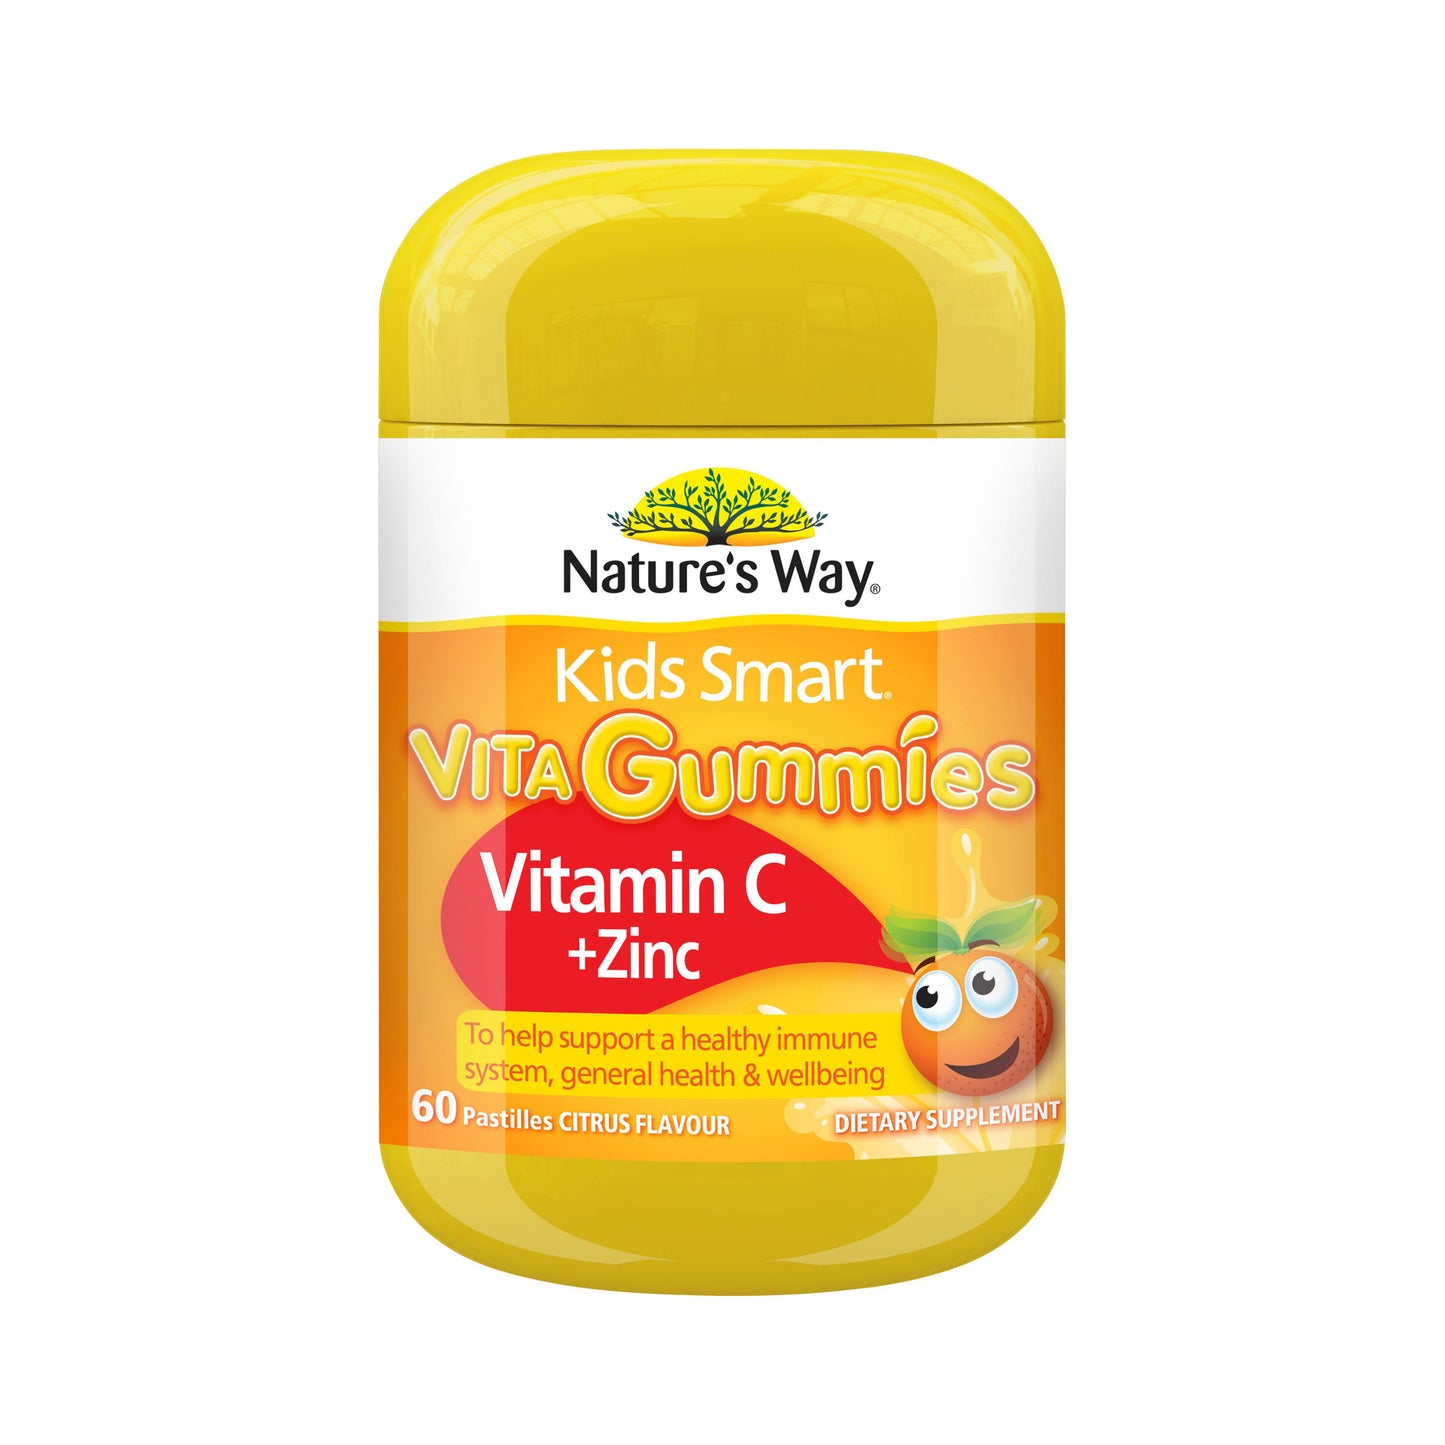 Nature's Way Kids Smart Vita Gummies Vitamin C Zinc 60 Pack